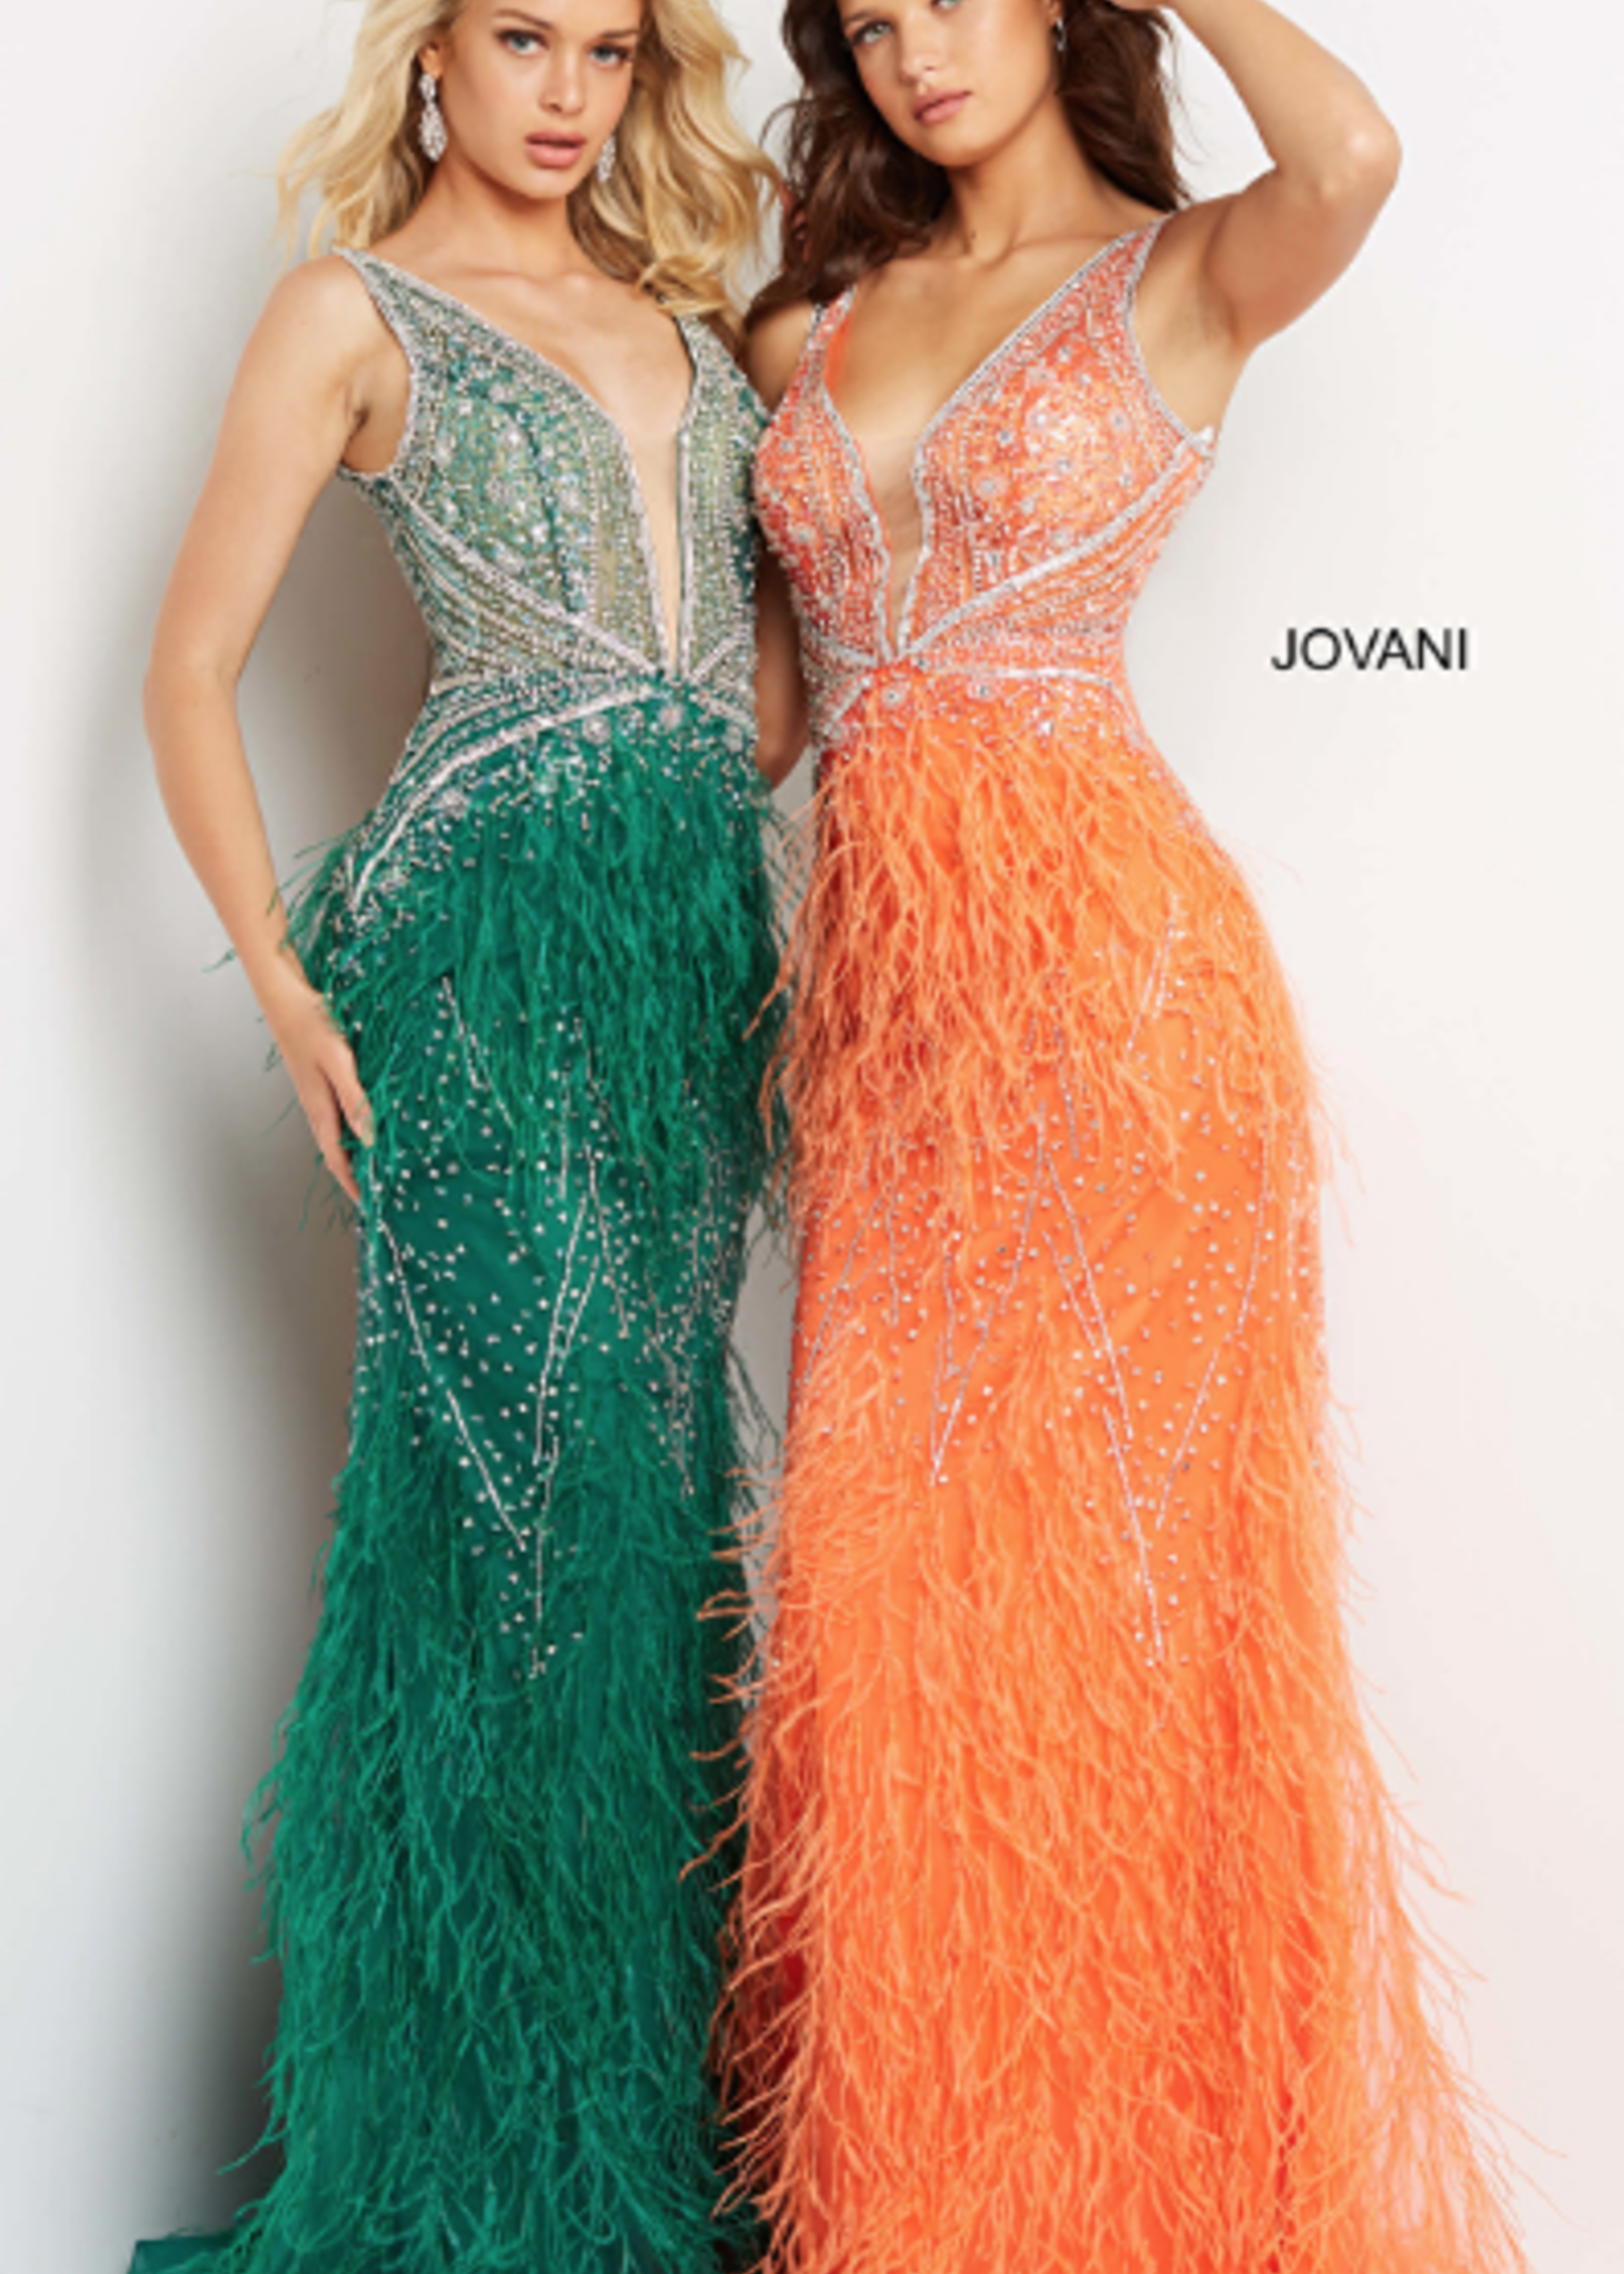 Jovani Emerald Feather Formal